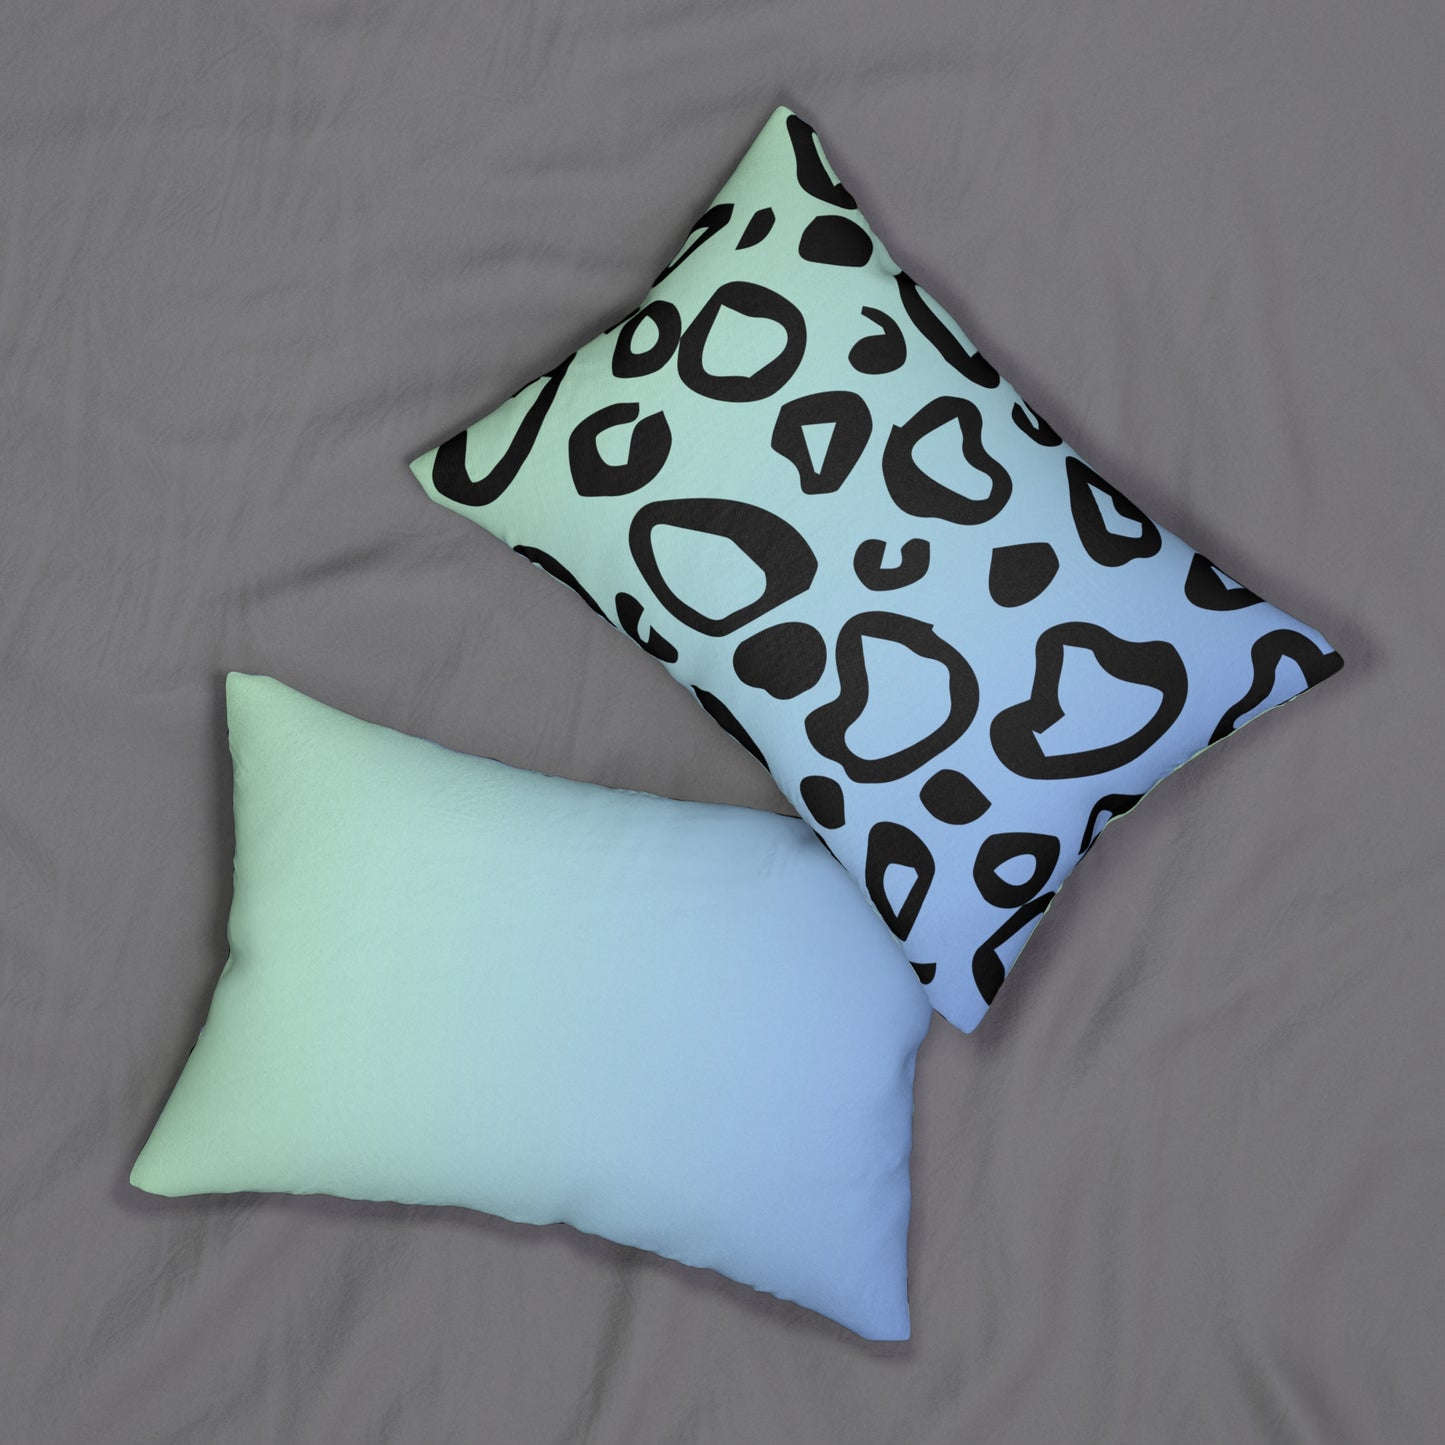 Leopard Print (Dual) Blue-Green Ombre Accent Pillow